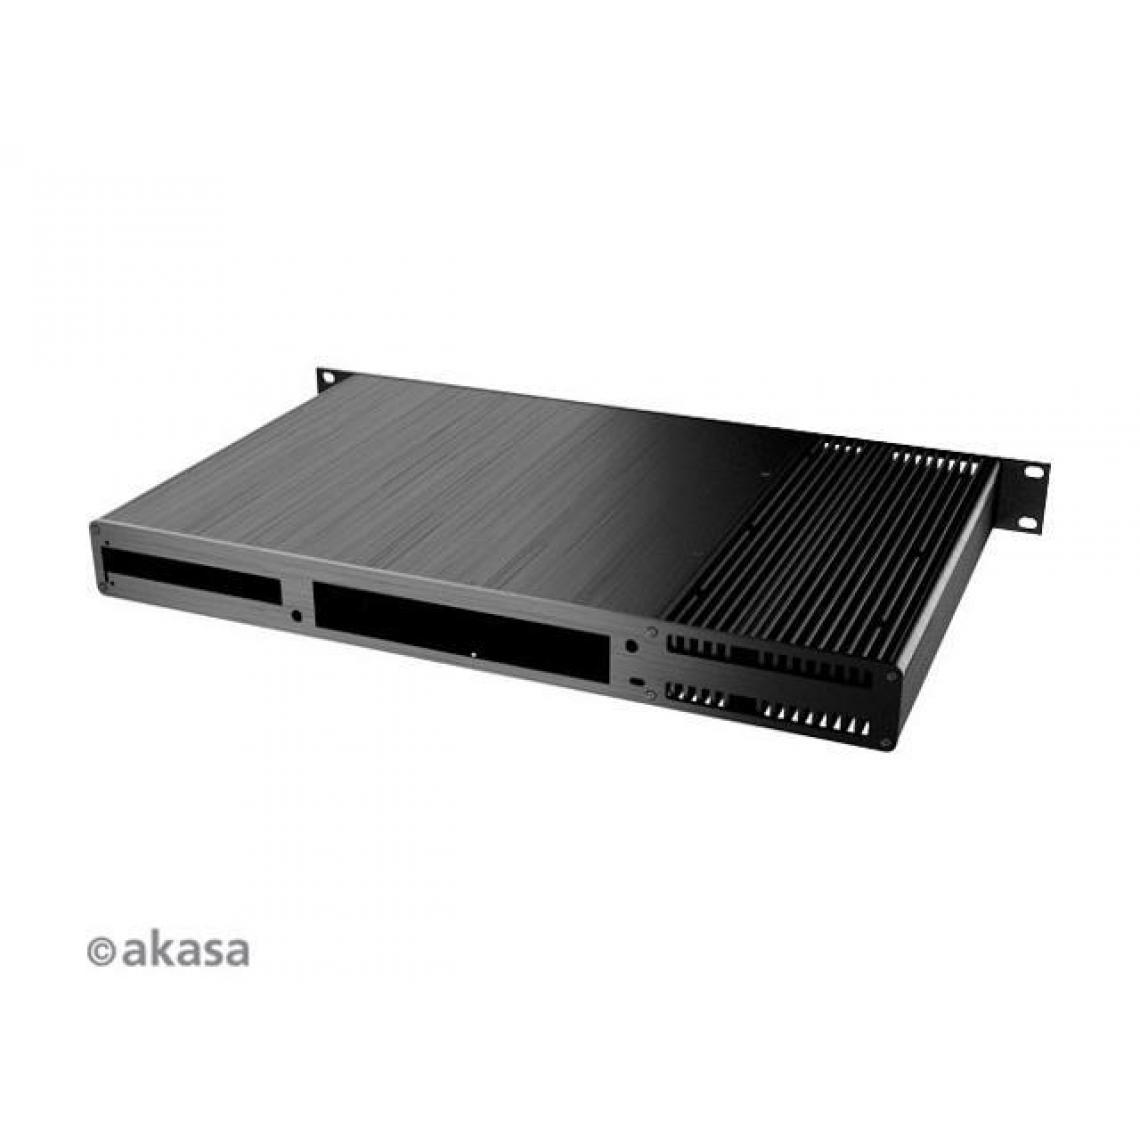 Akasa - Galileo TU1 Thin Mini-ITX boîtier 1U - Boitier PC